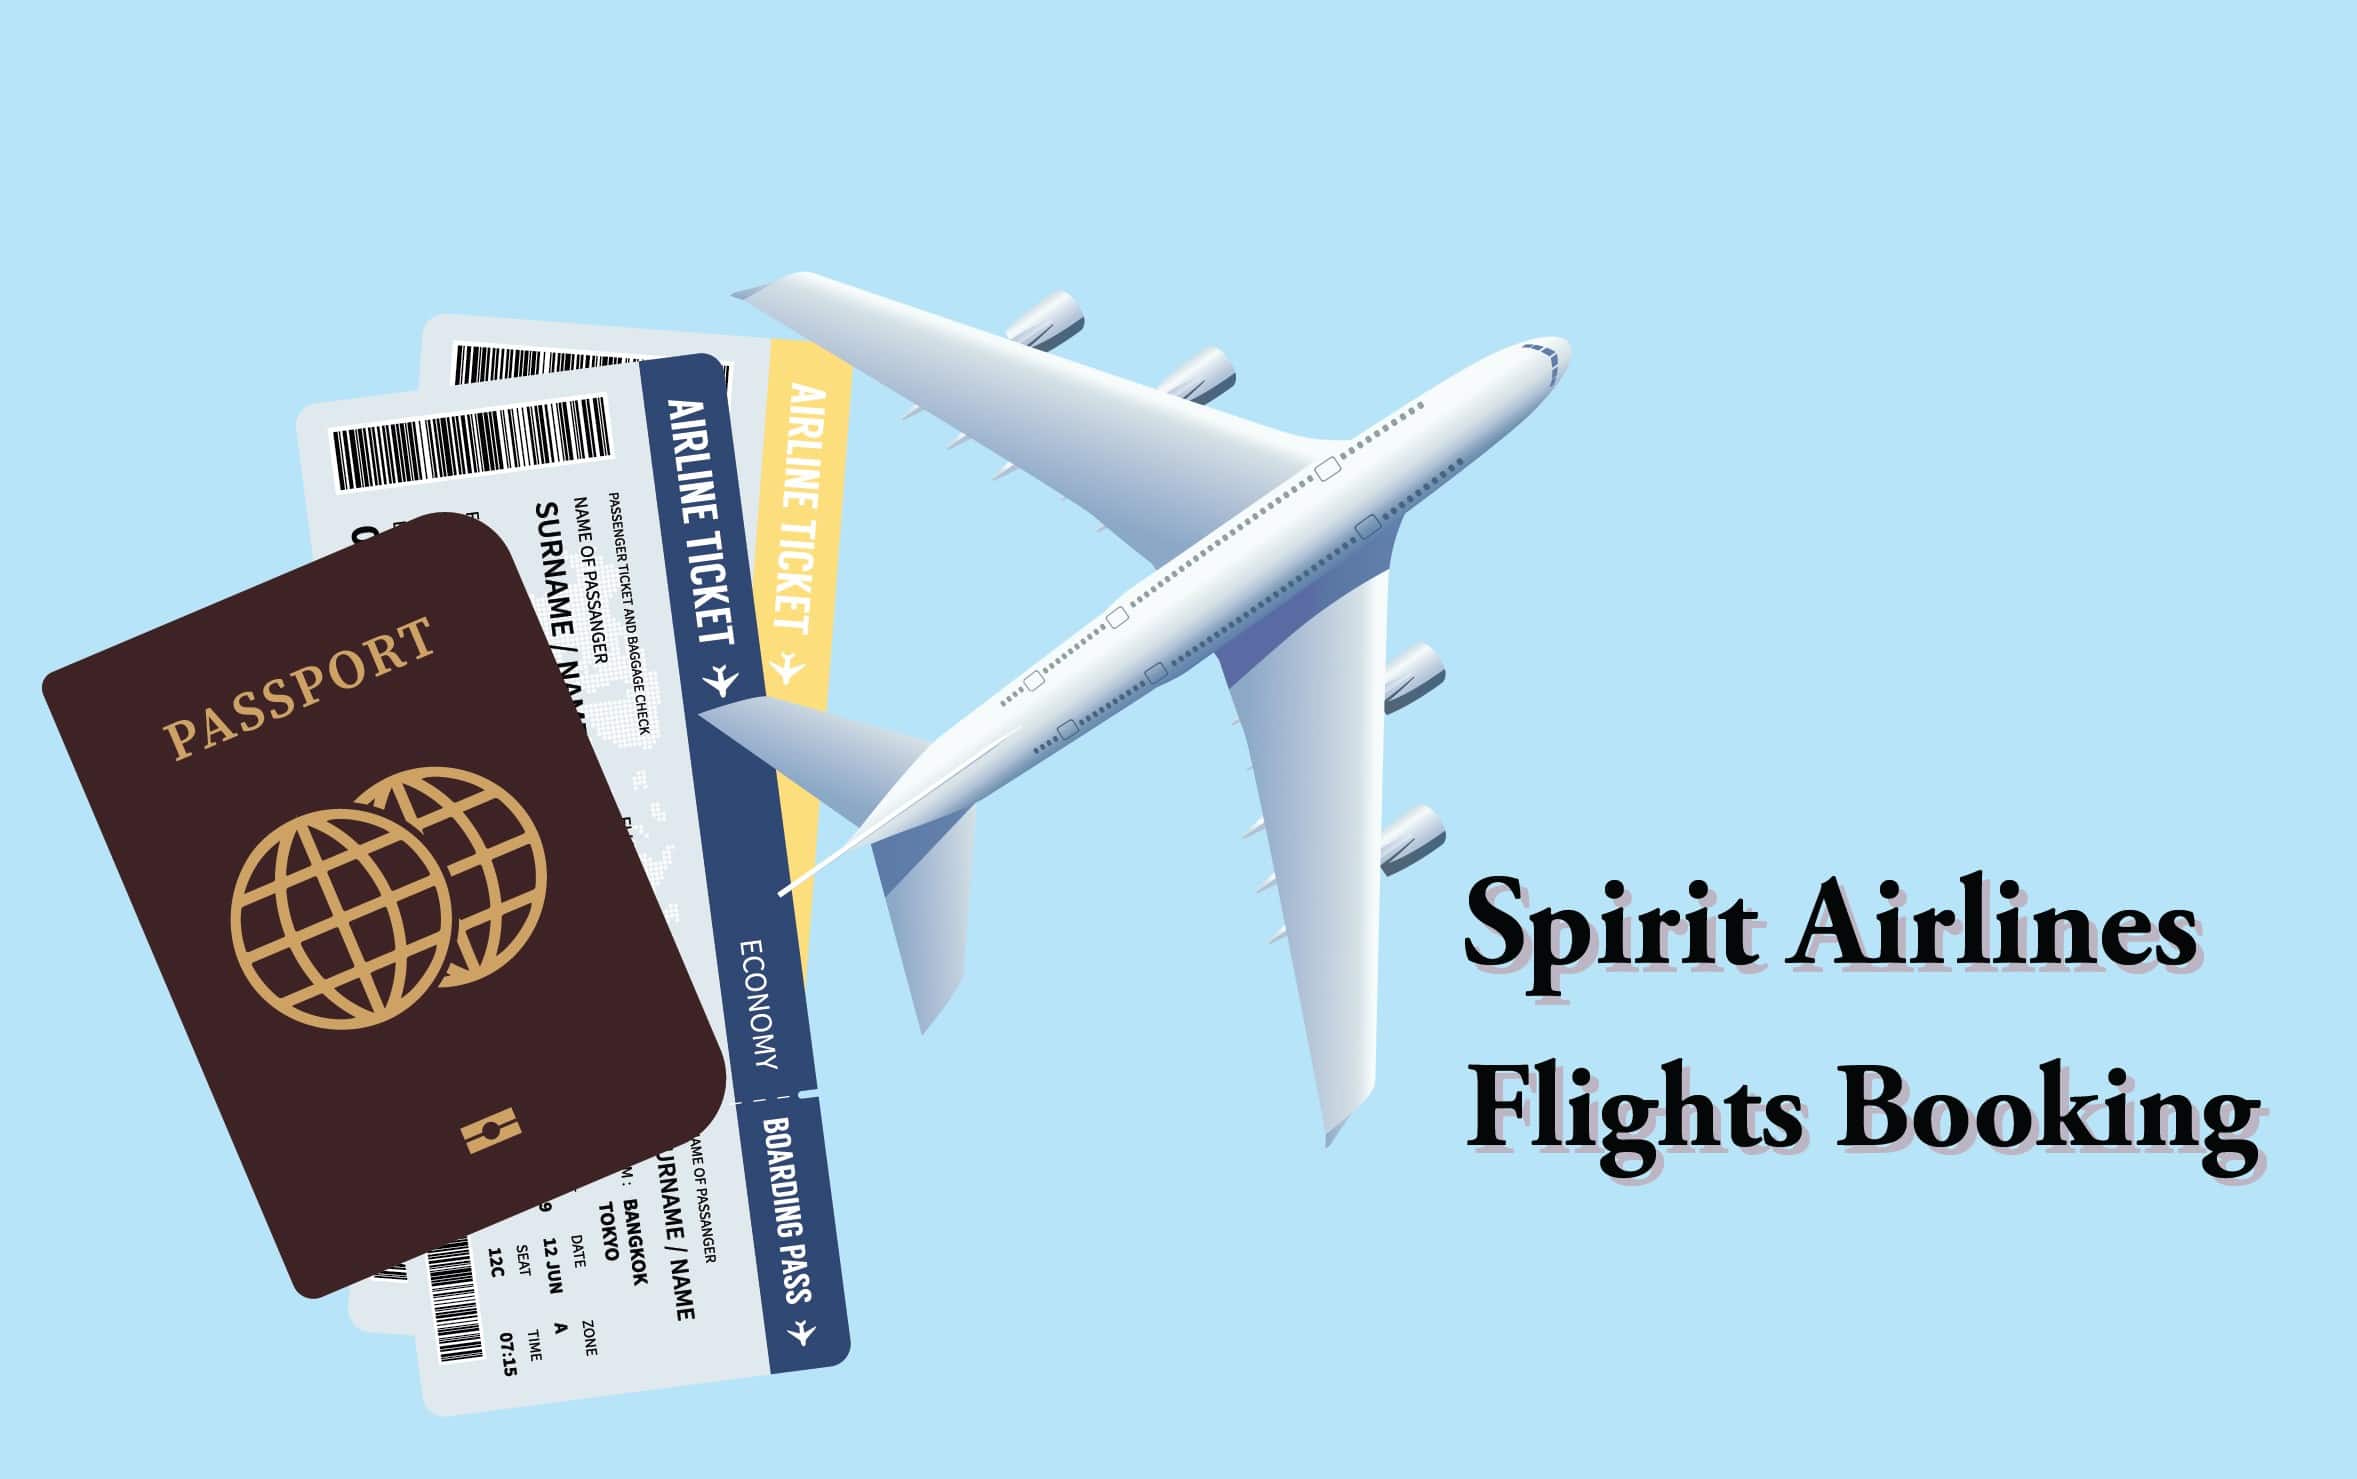 flights booking of spirit airlines 